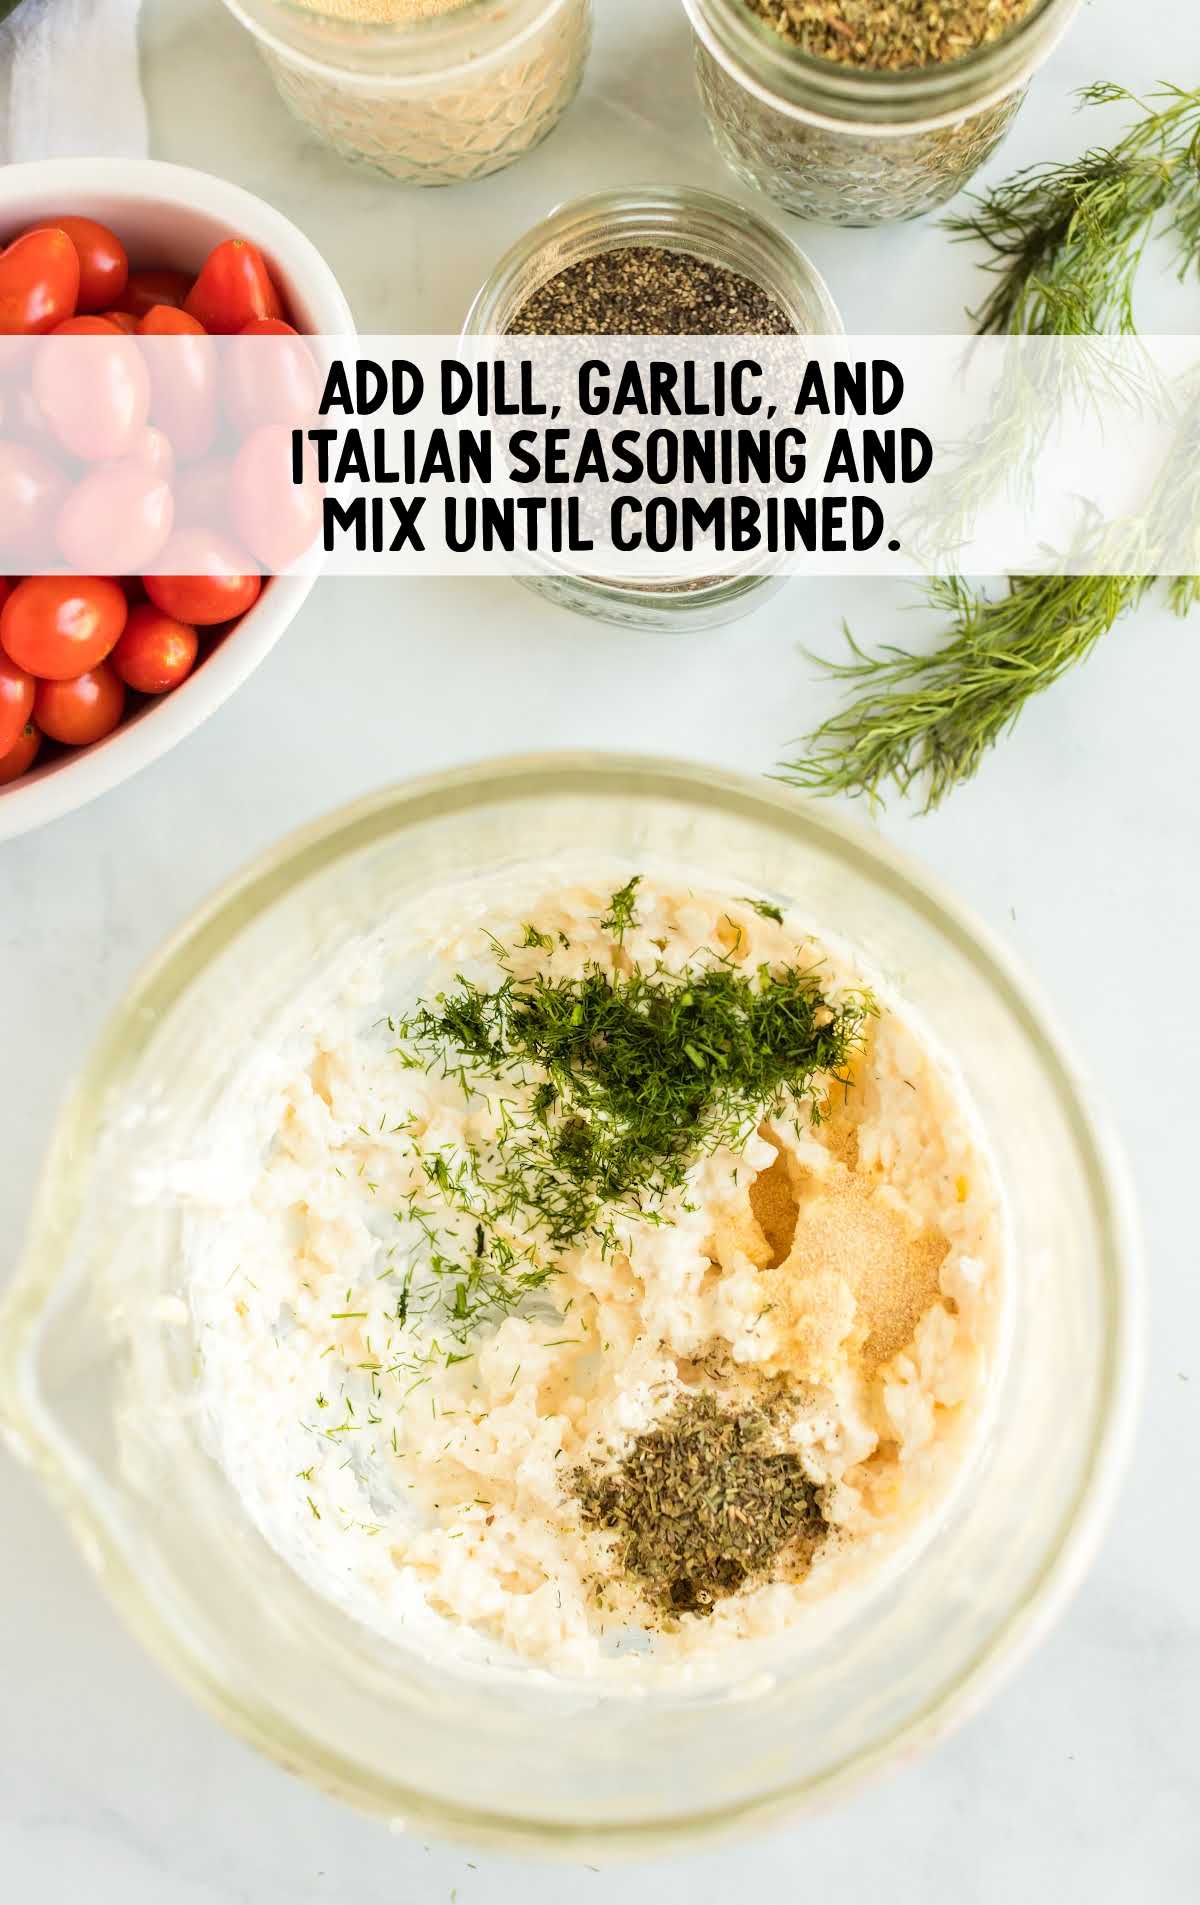 dill, garlic salt, and Italian seasoning combined in a bowl